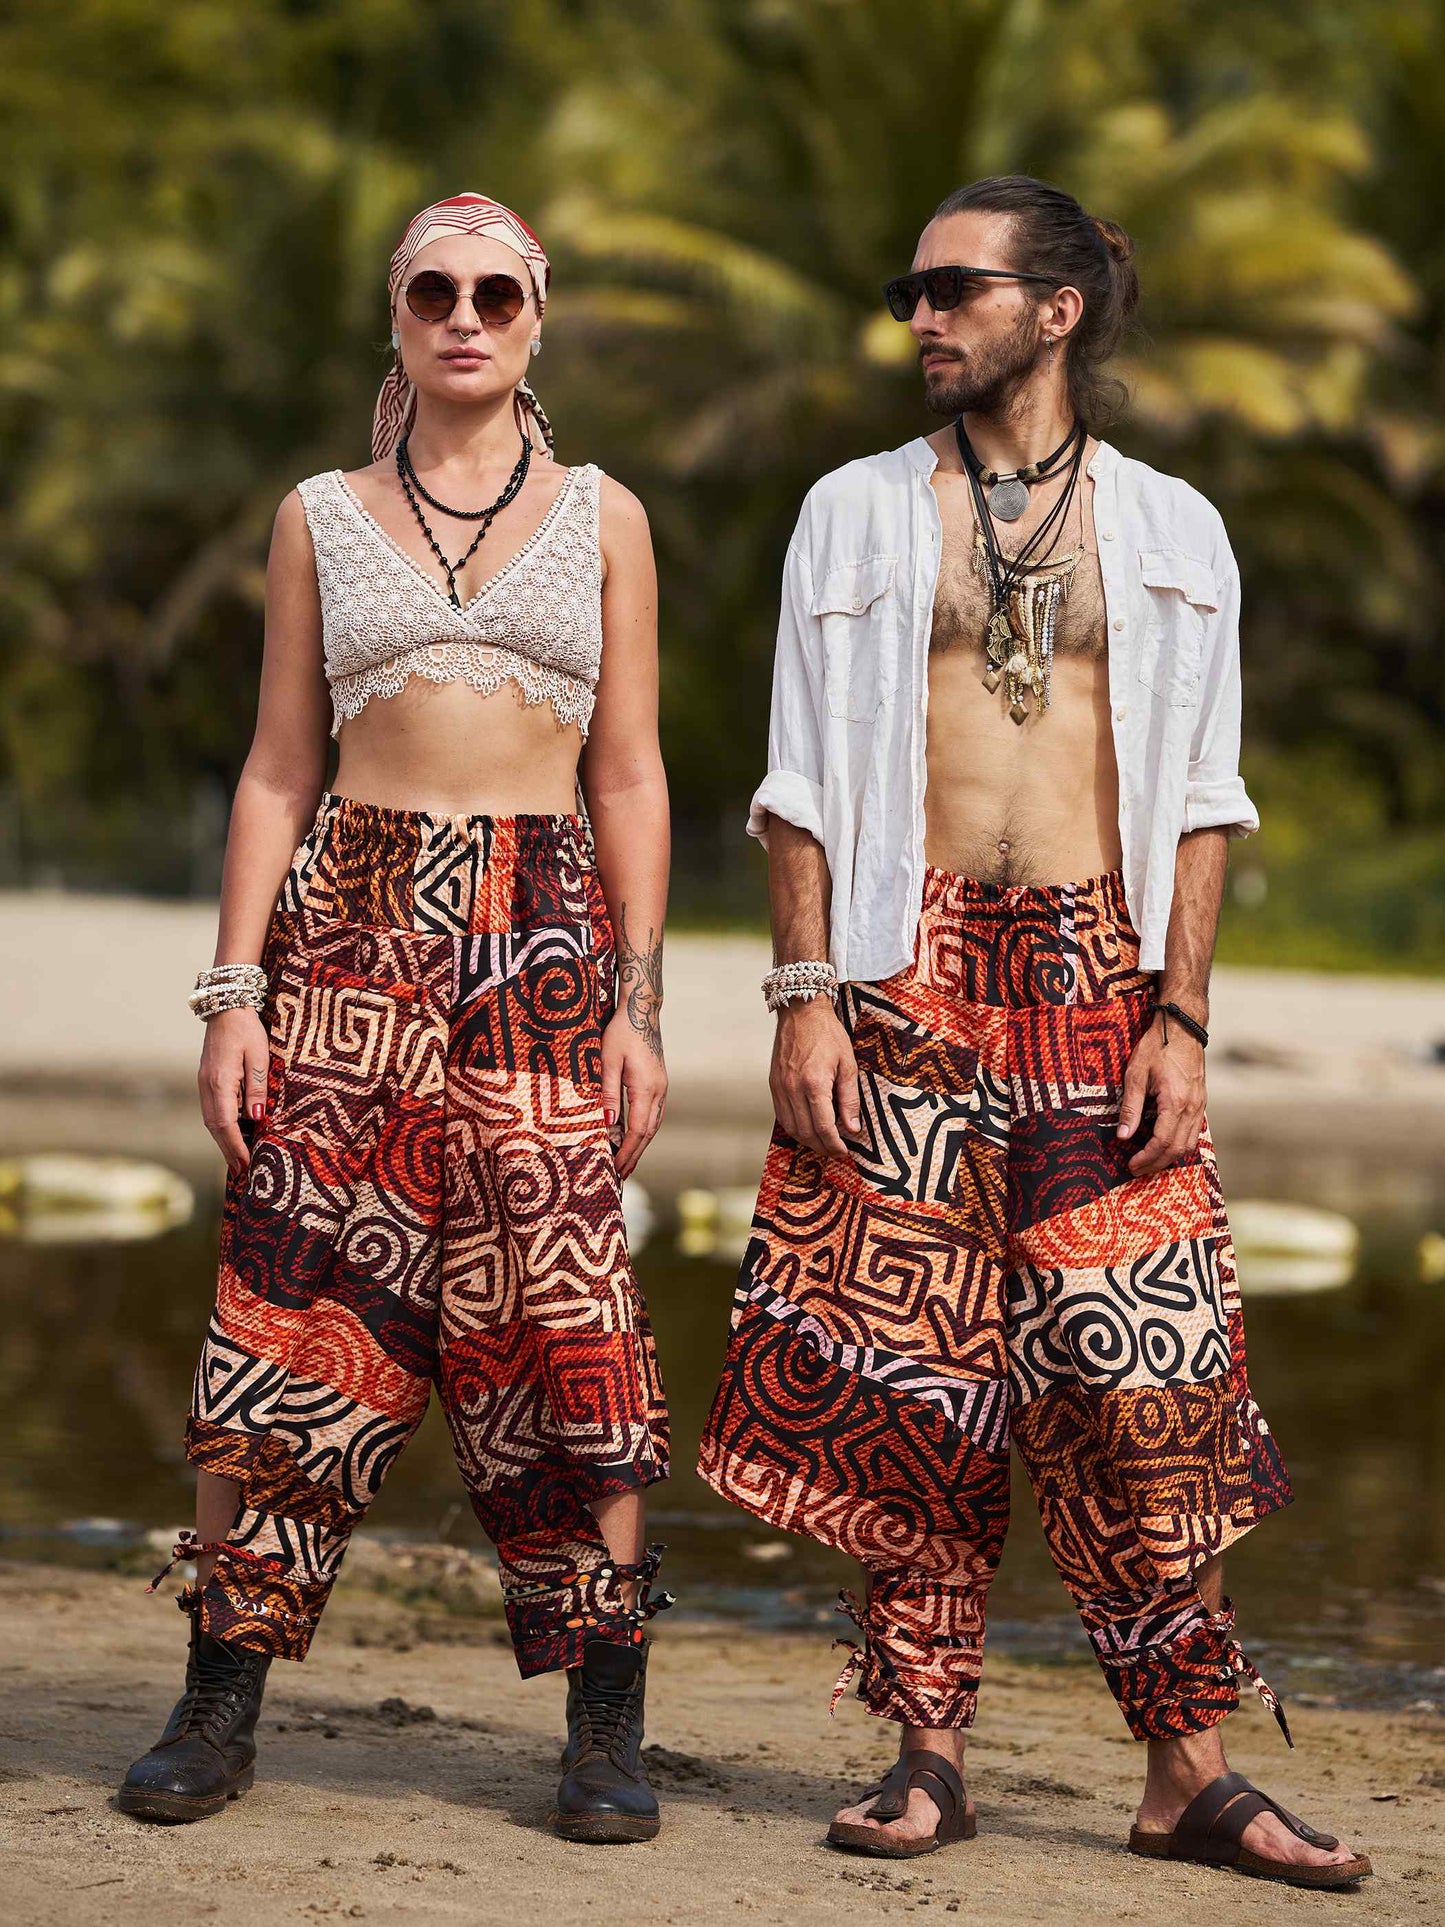 Buy Women's Flowy Graphic Printed Hippy Harem Pants For Travel Yoga Dance